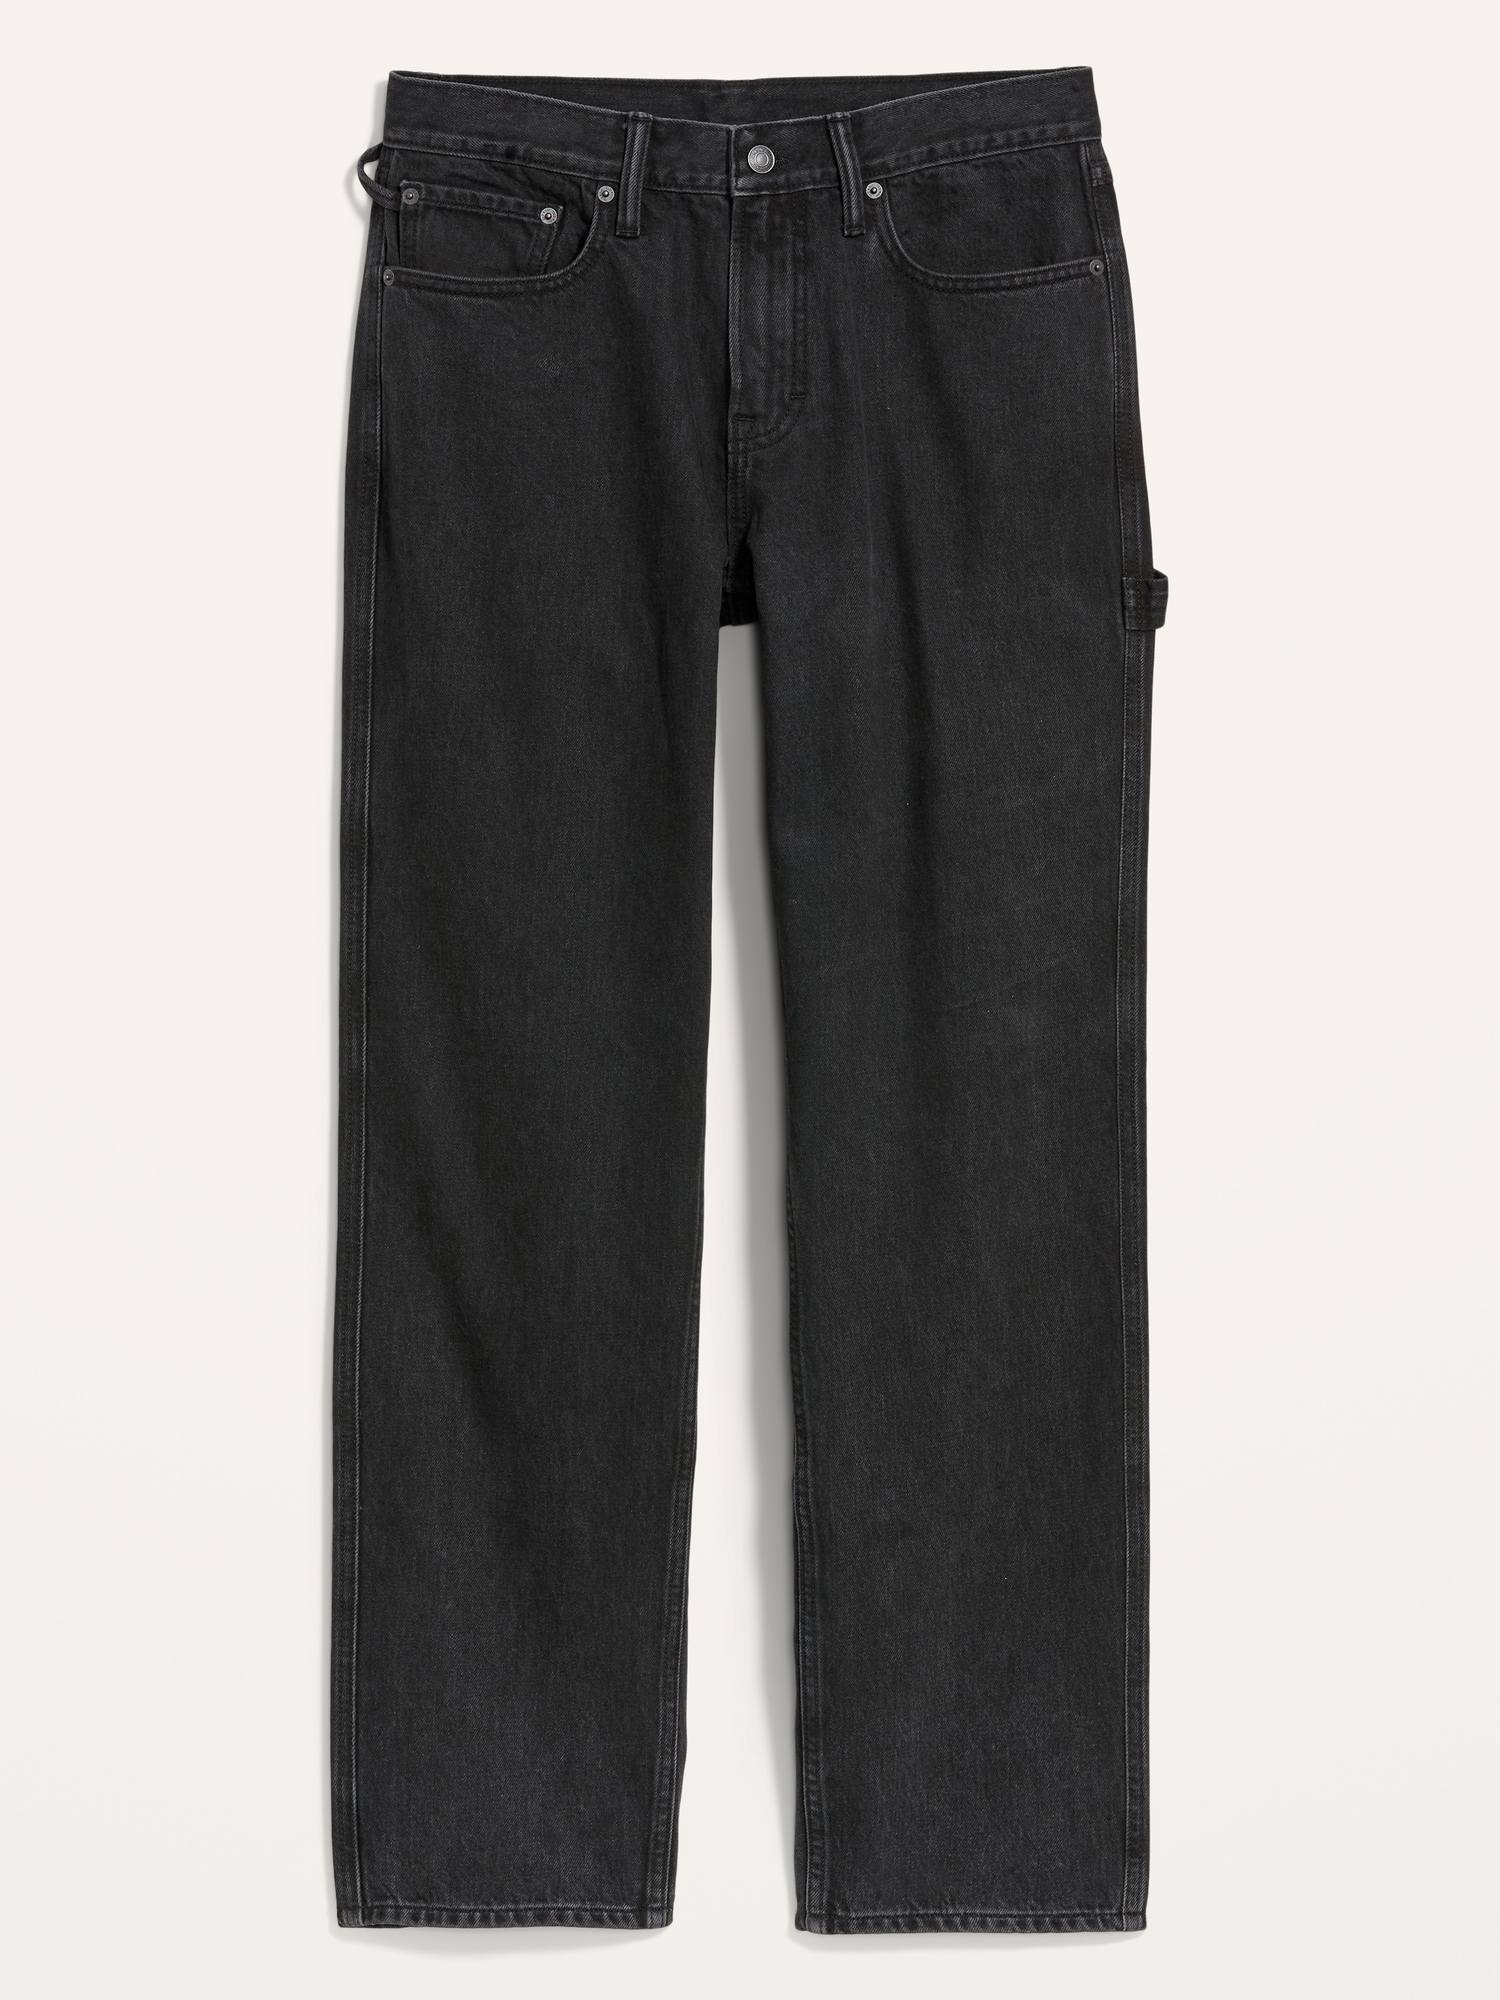 Loose Rigid Non-Stretch Black Carpenter Jeans for Men | Old Navy